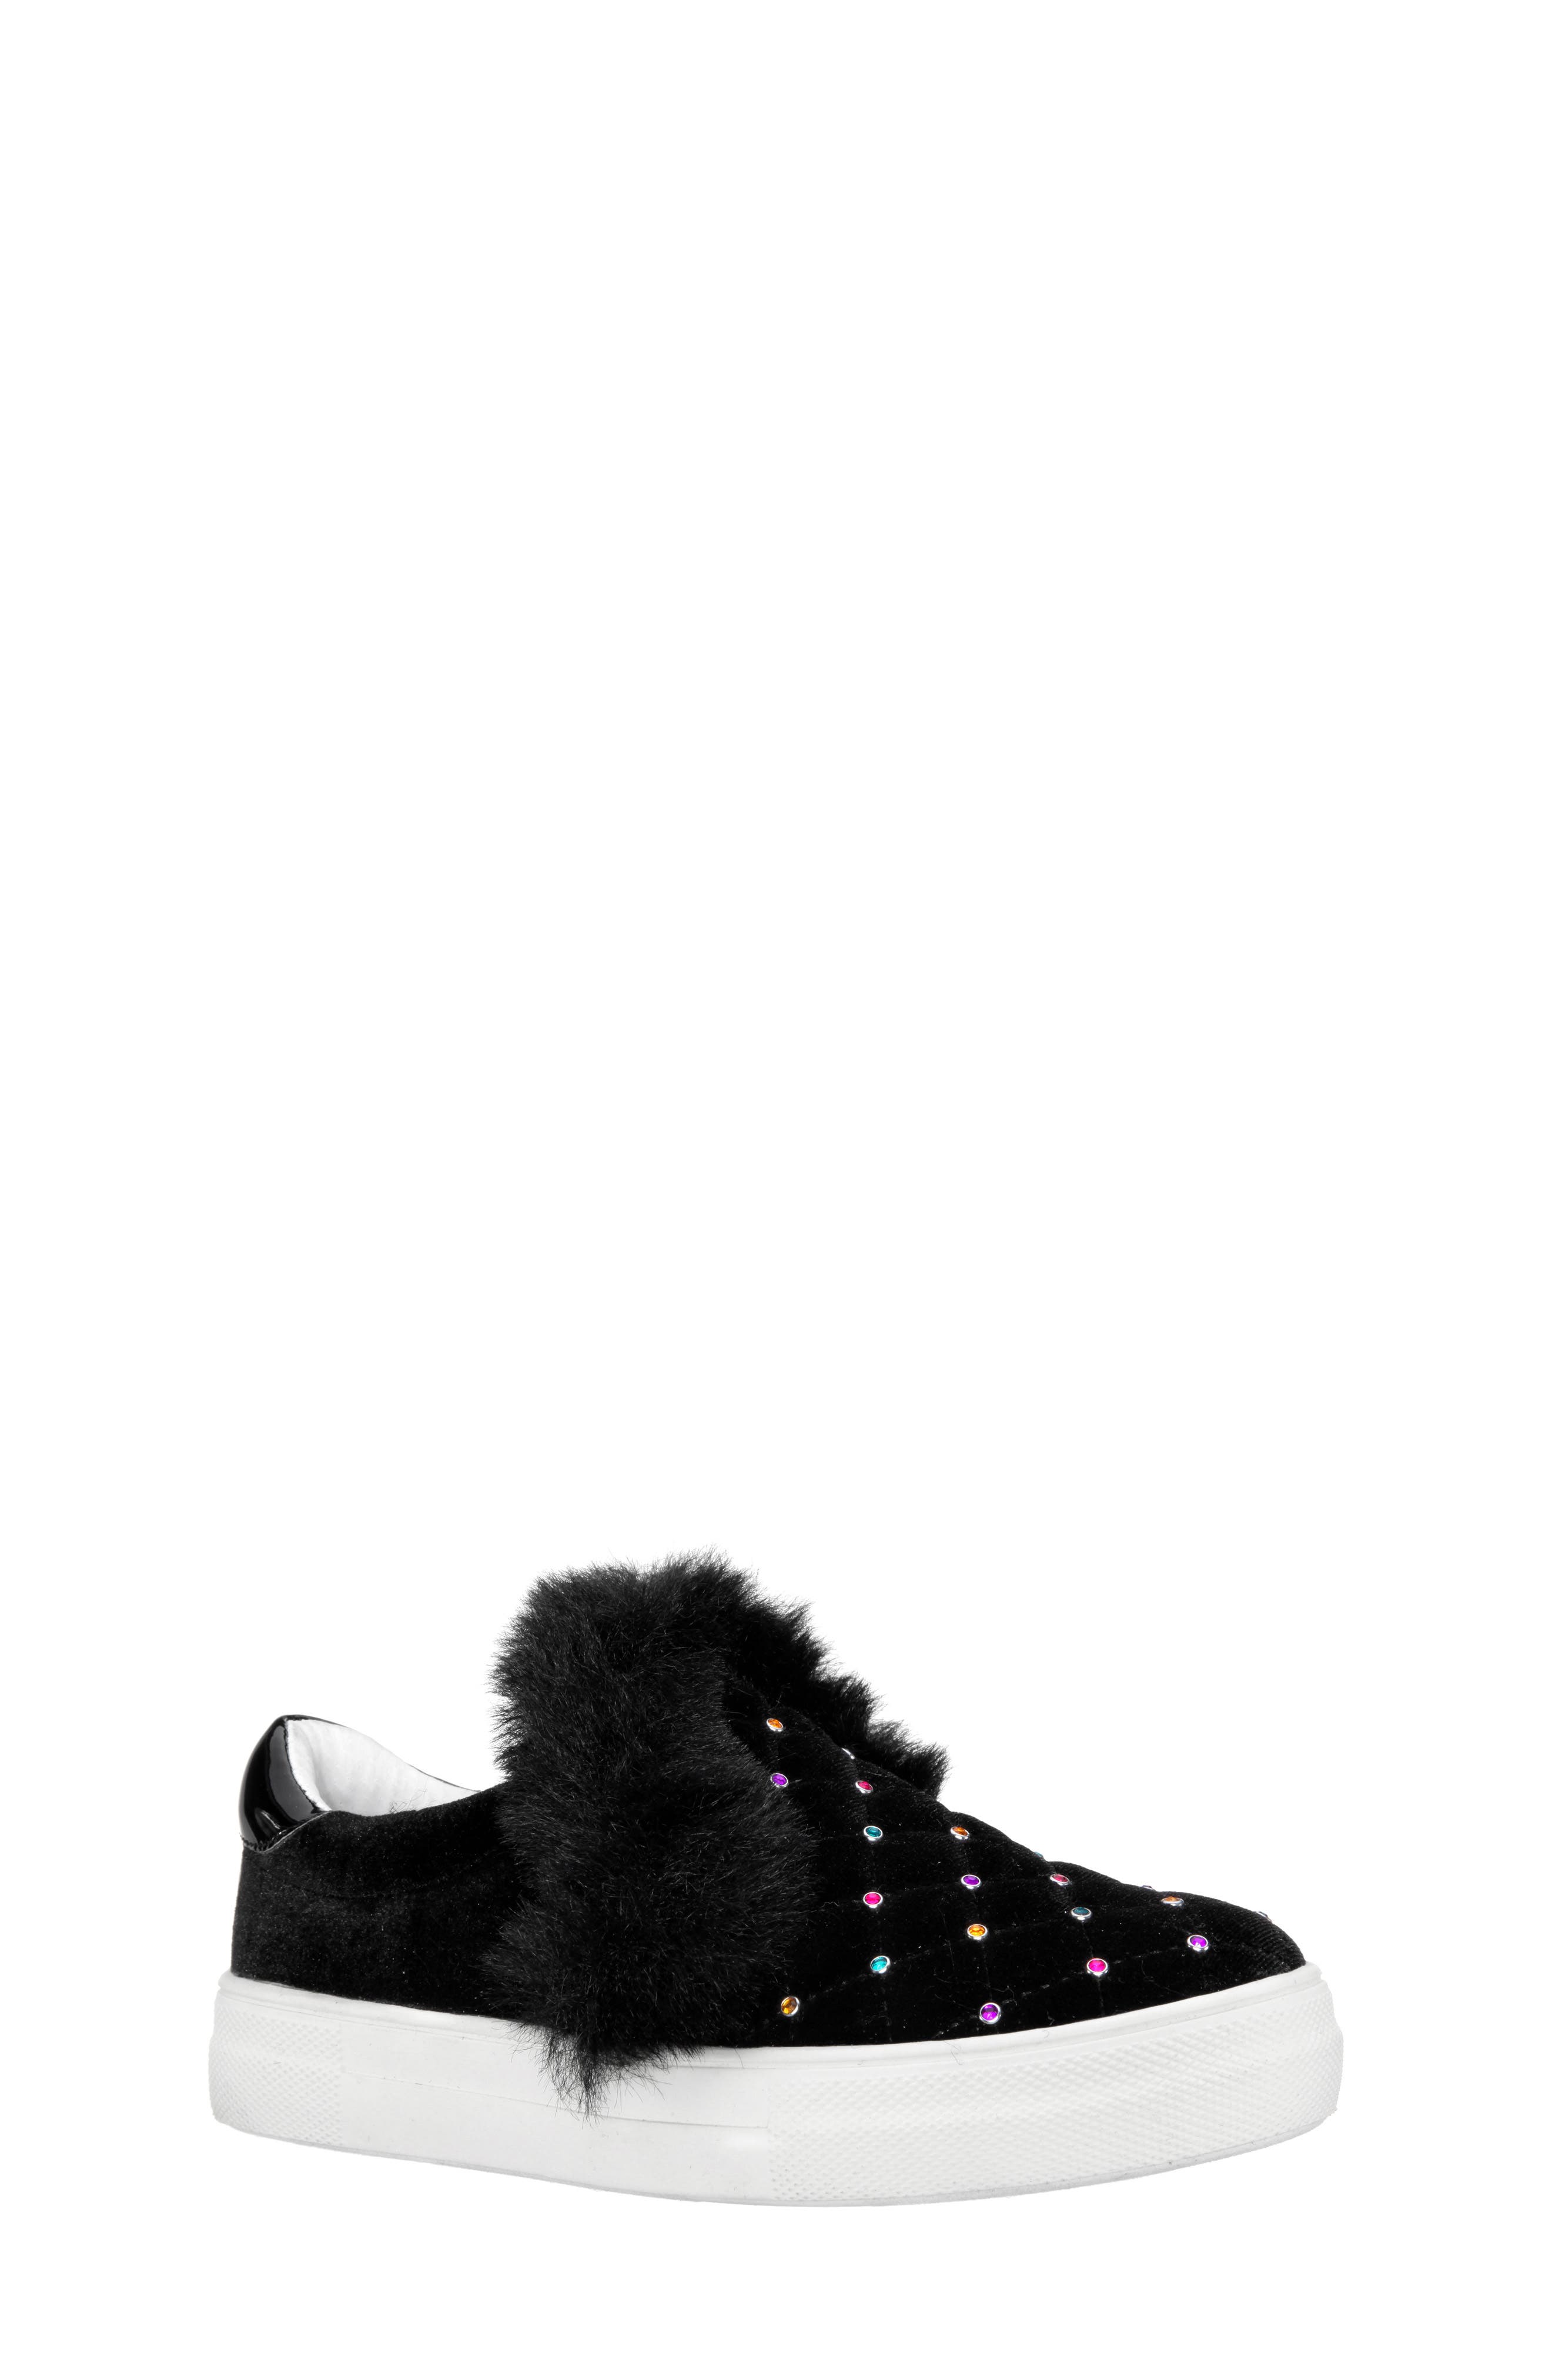 UPC 794378406013 product image for Toddler Girl's Nina Caziah Faux Fur Sneaker, Size 12 M - Black | upcitemdb.com